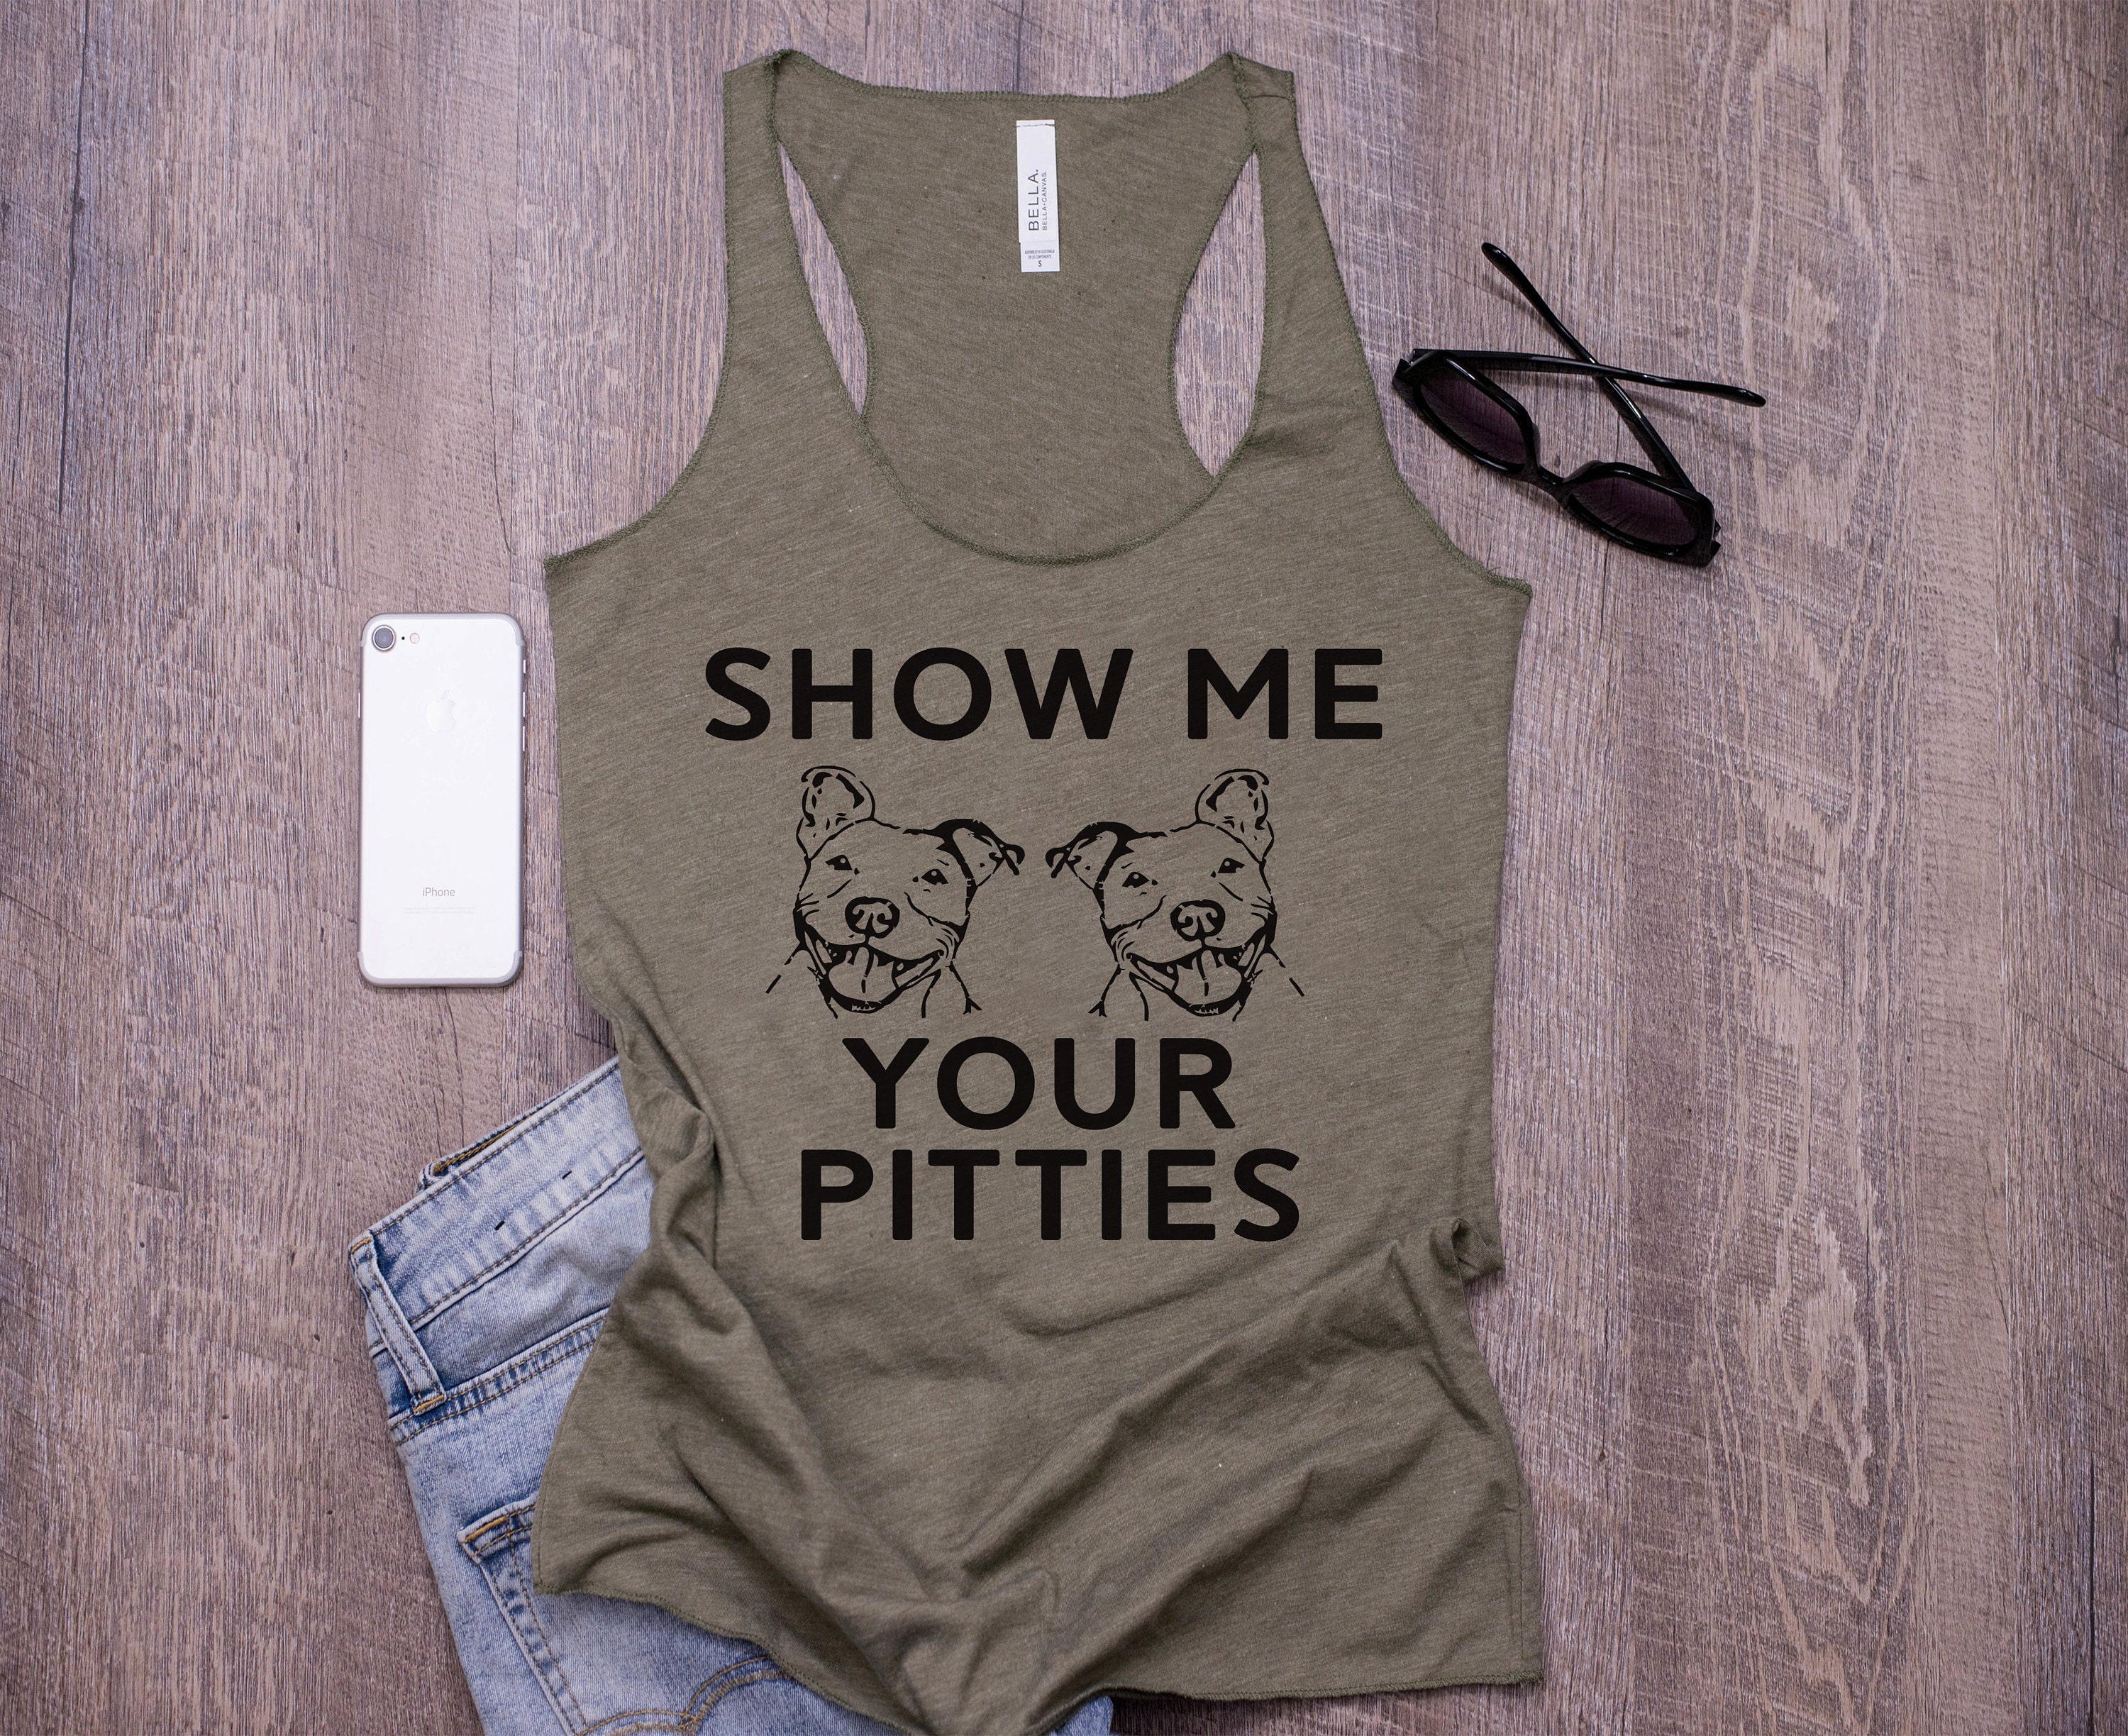 Show Me Your Pitties - Funny Pitbull Shirt Tops & Tees Dog Shirts Women's Tank Top Racerback